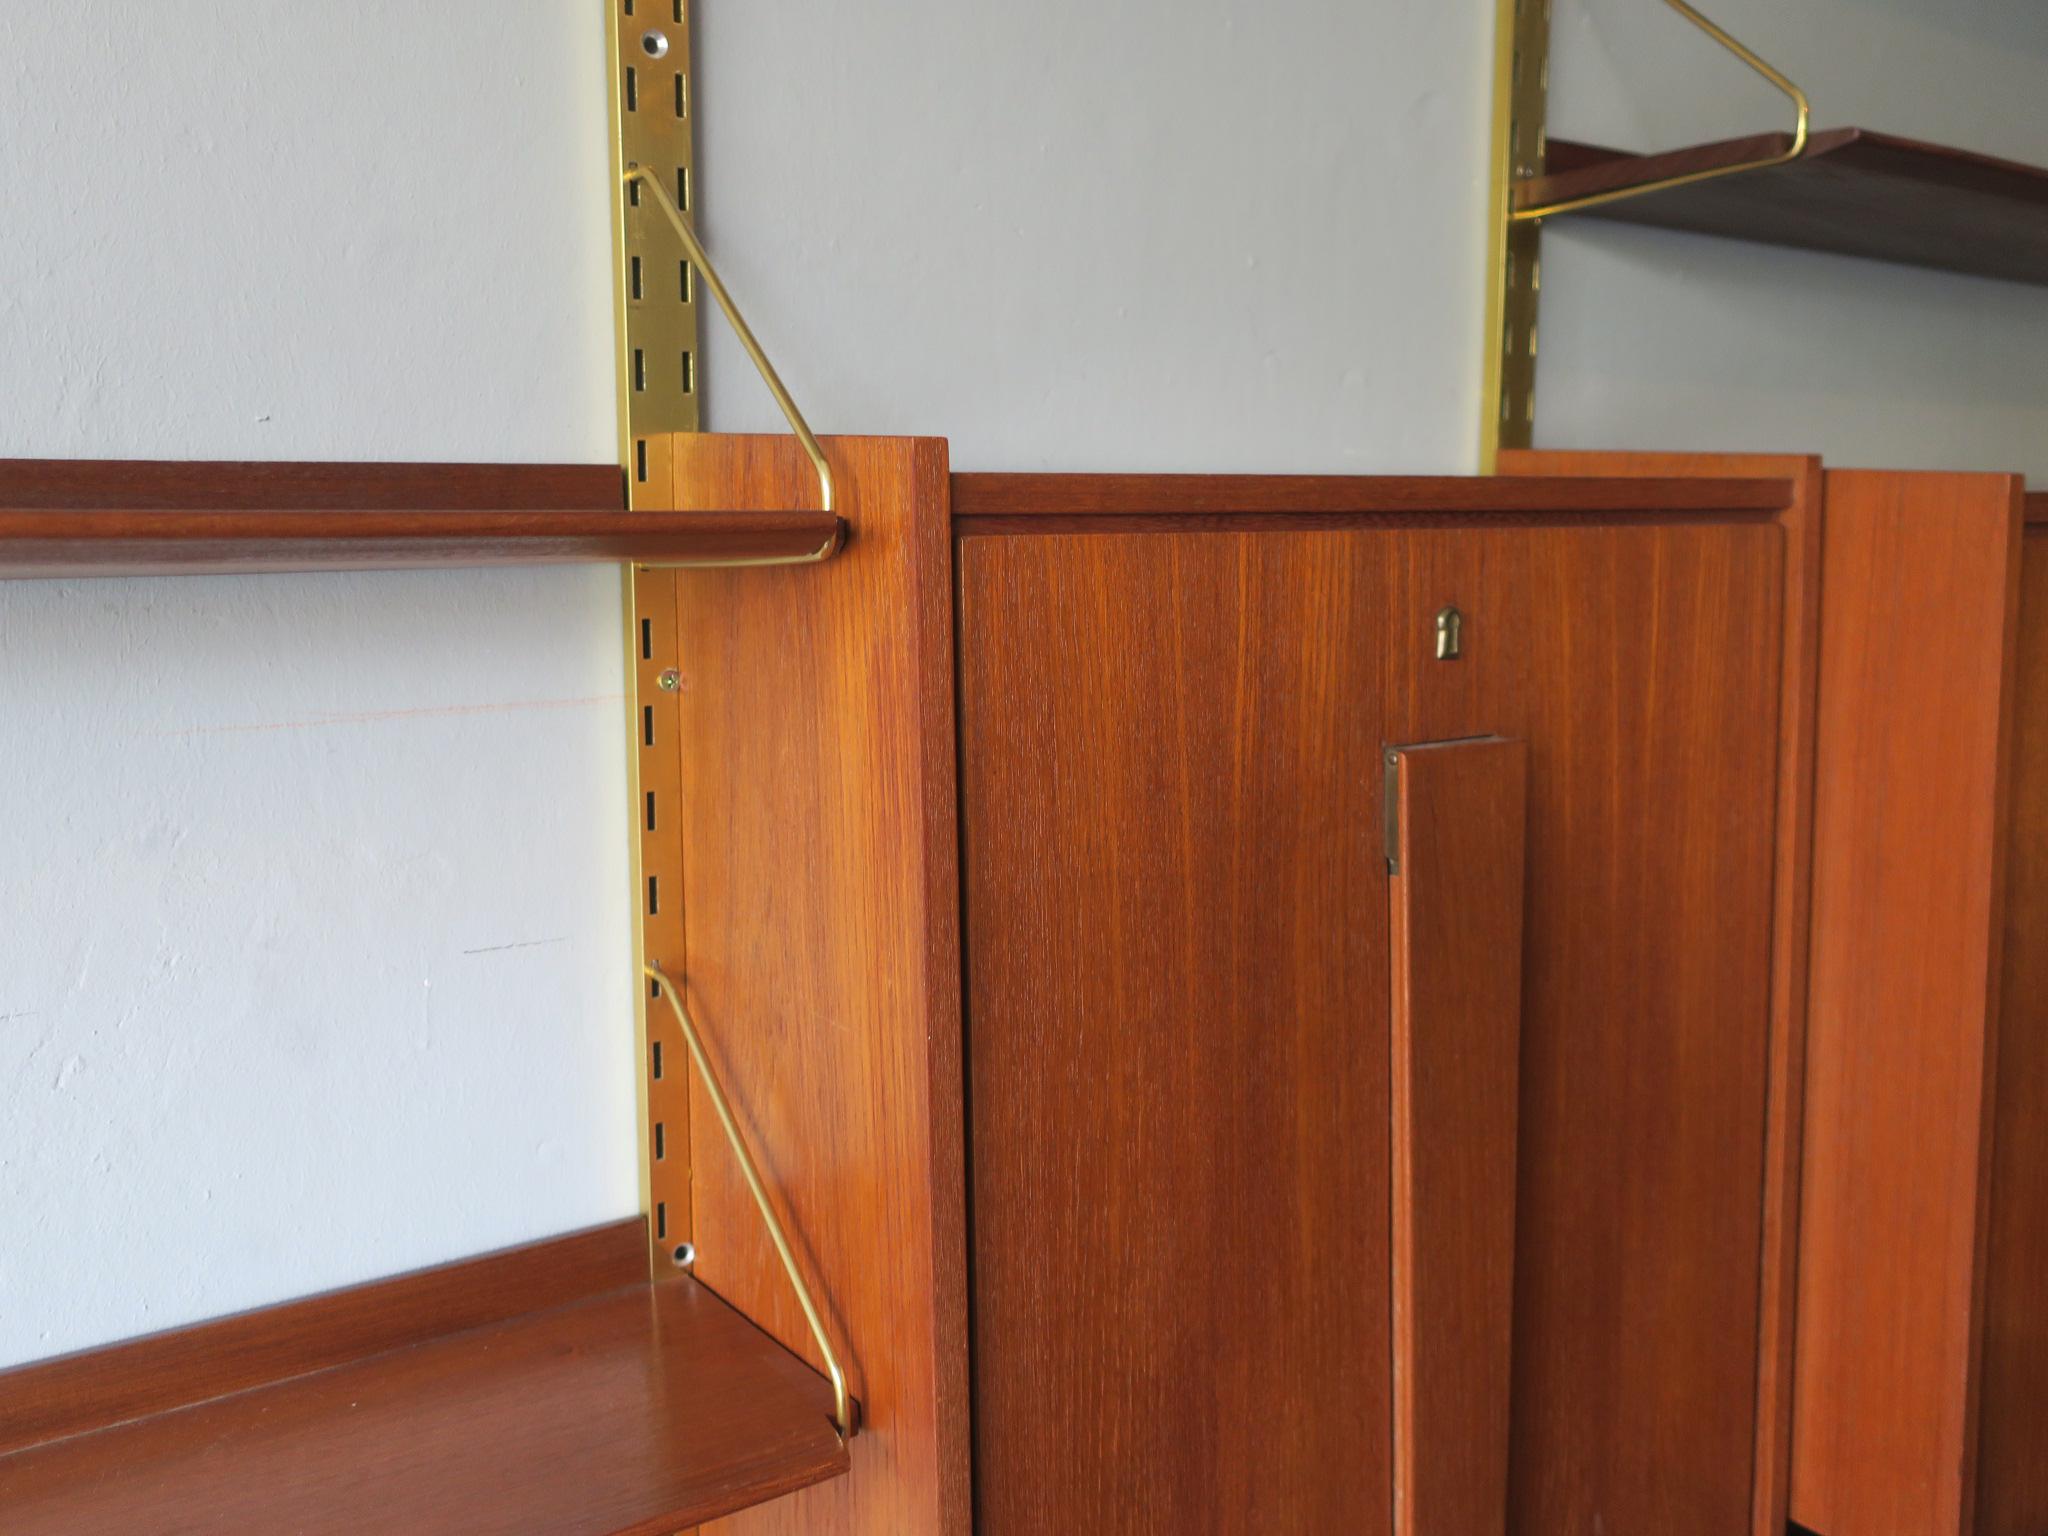 Danish Midcentury Teak Modular Shelf System with Low Sideboard, 1960s For Sale